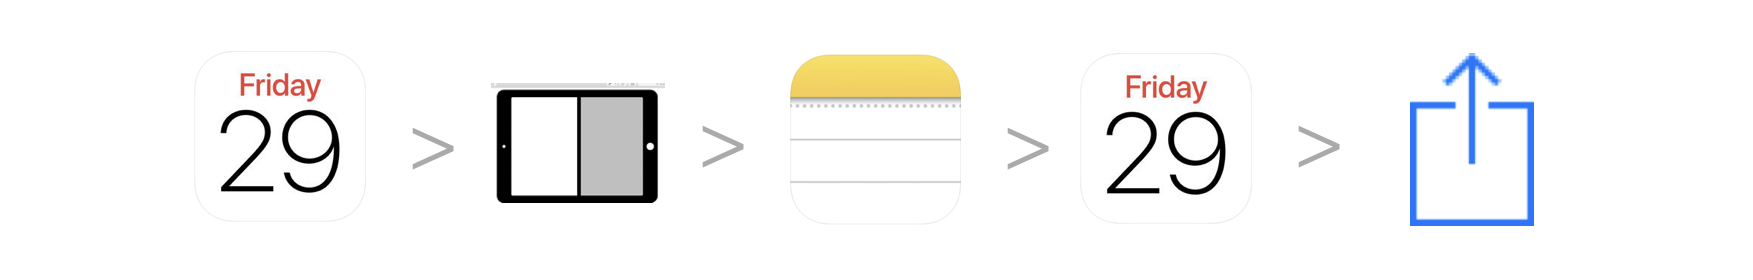 Flow of apps and tools. Calendar, Split screen, Notes, Calendar, Share